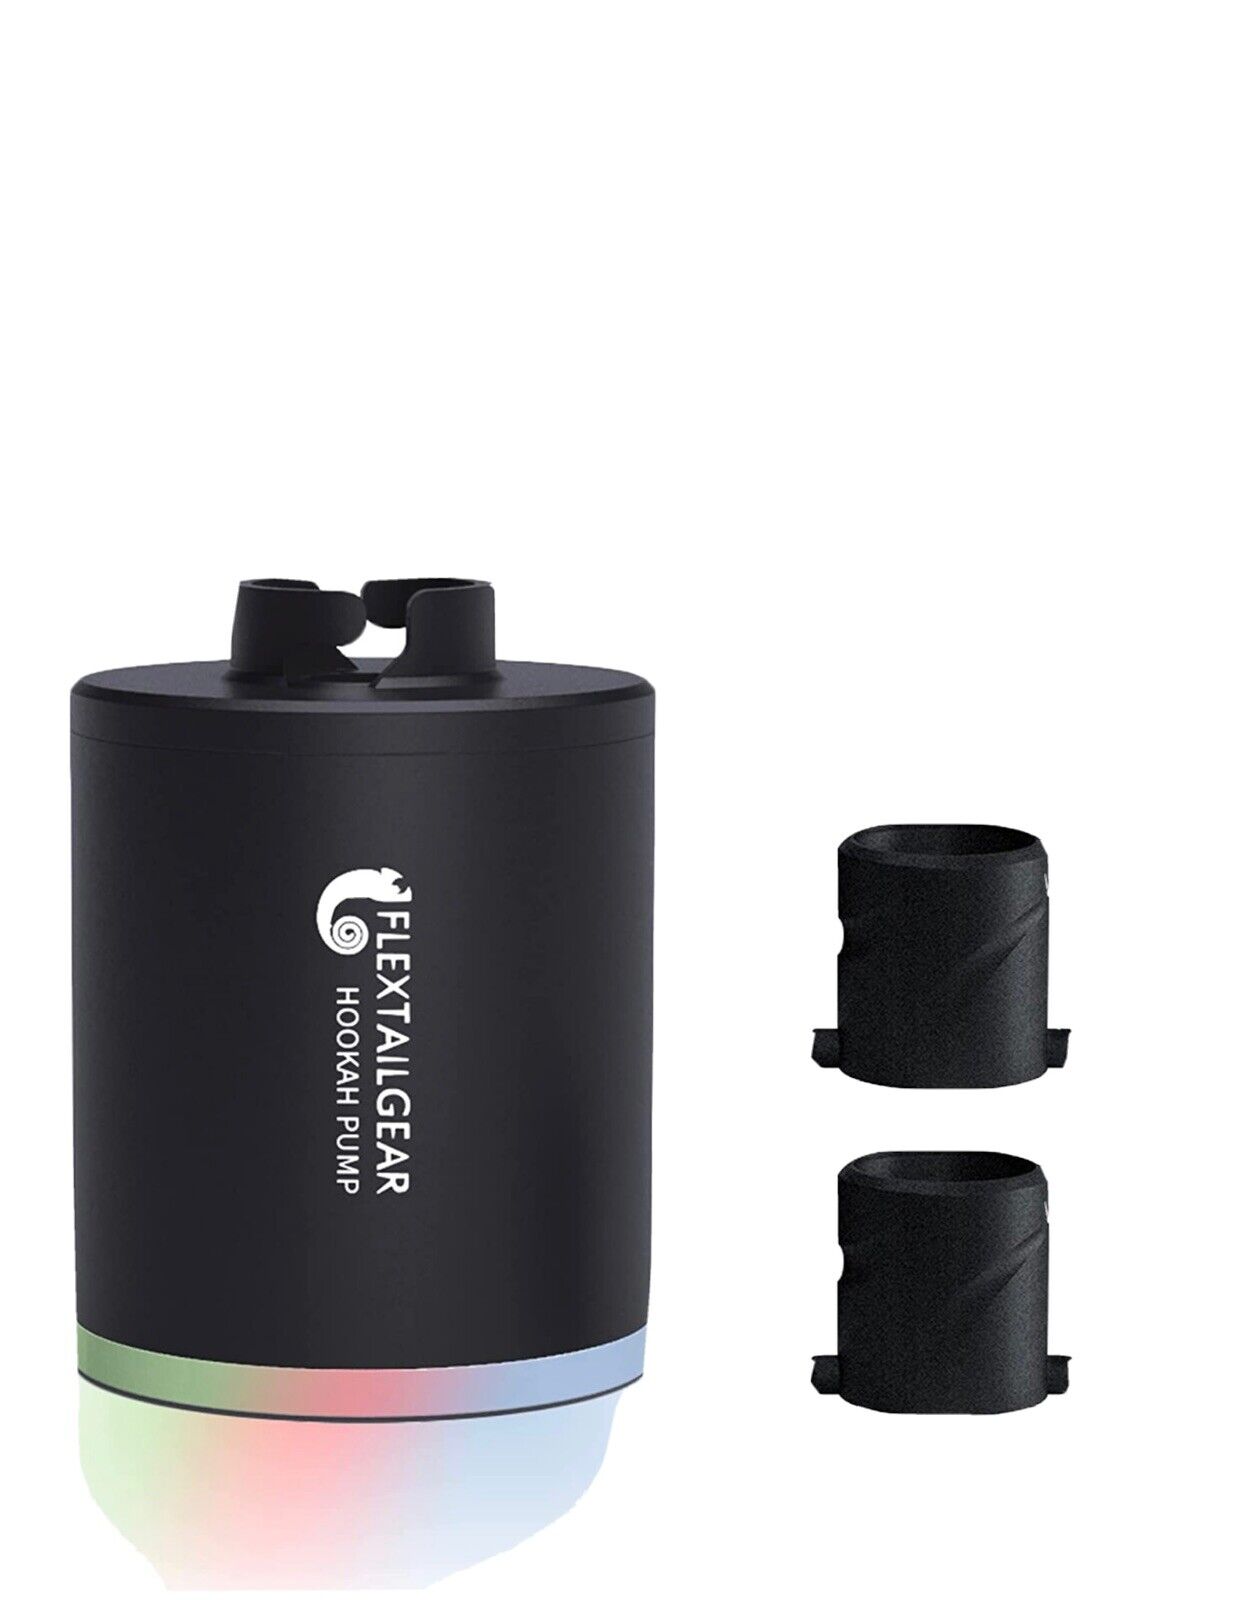 Electric Hookah Pump Mini Portable Starter Charcoal Burner Helper Kit